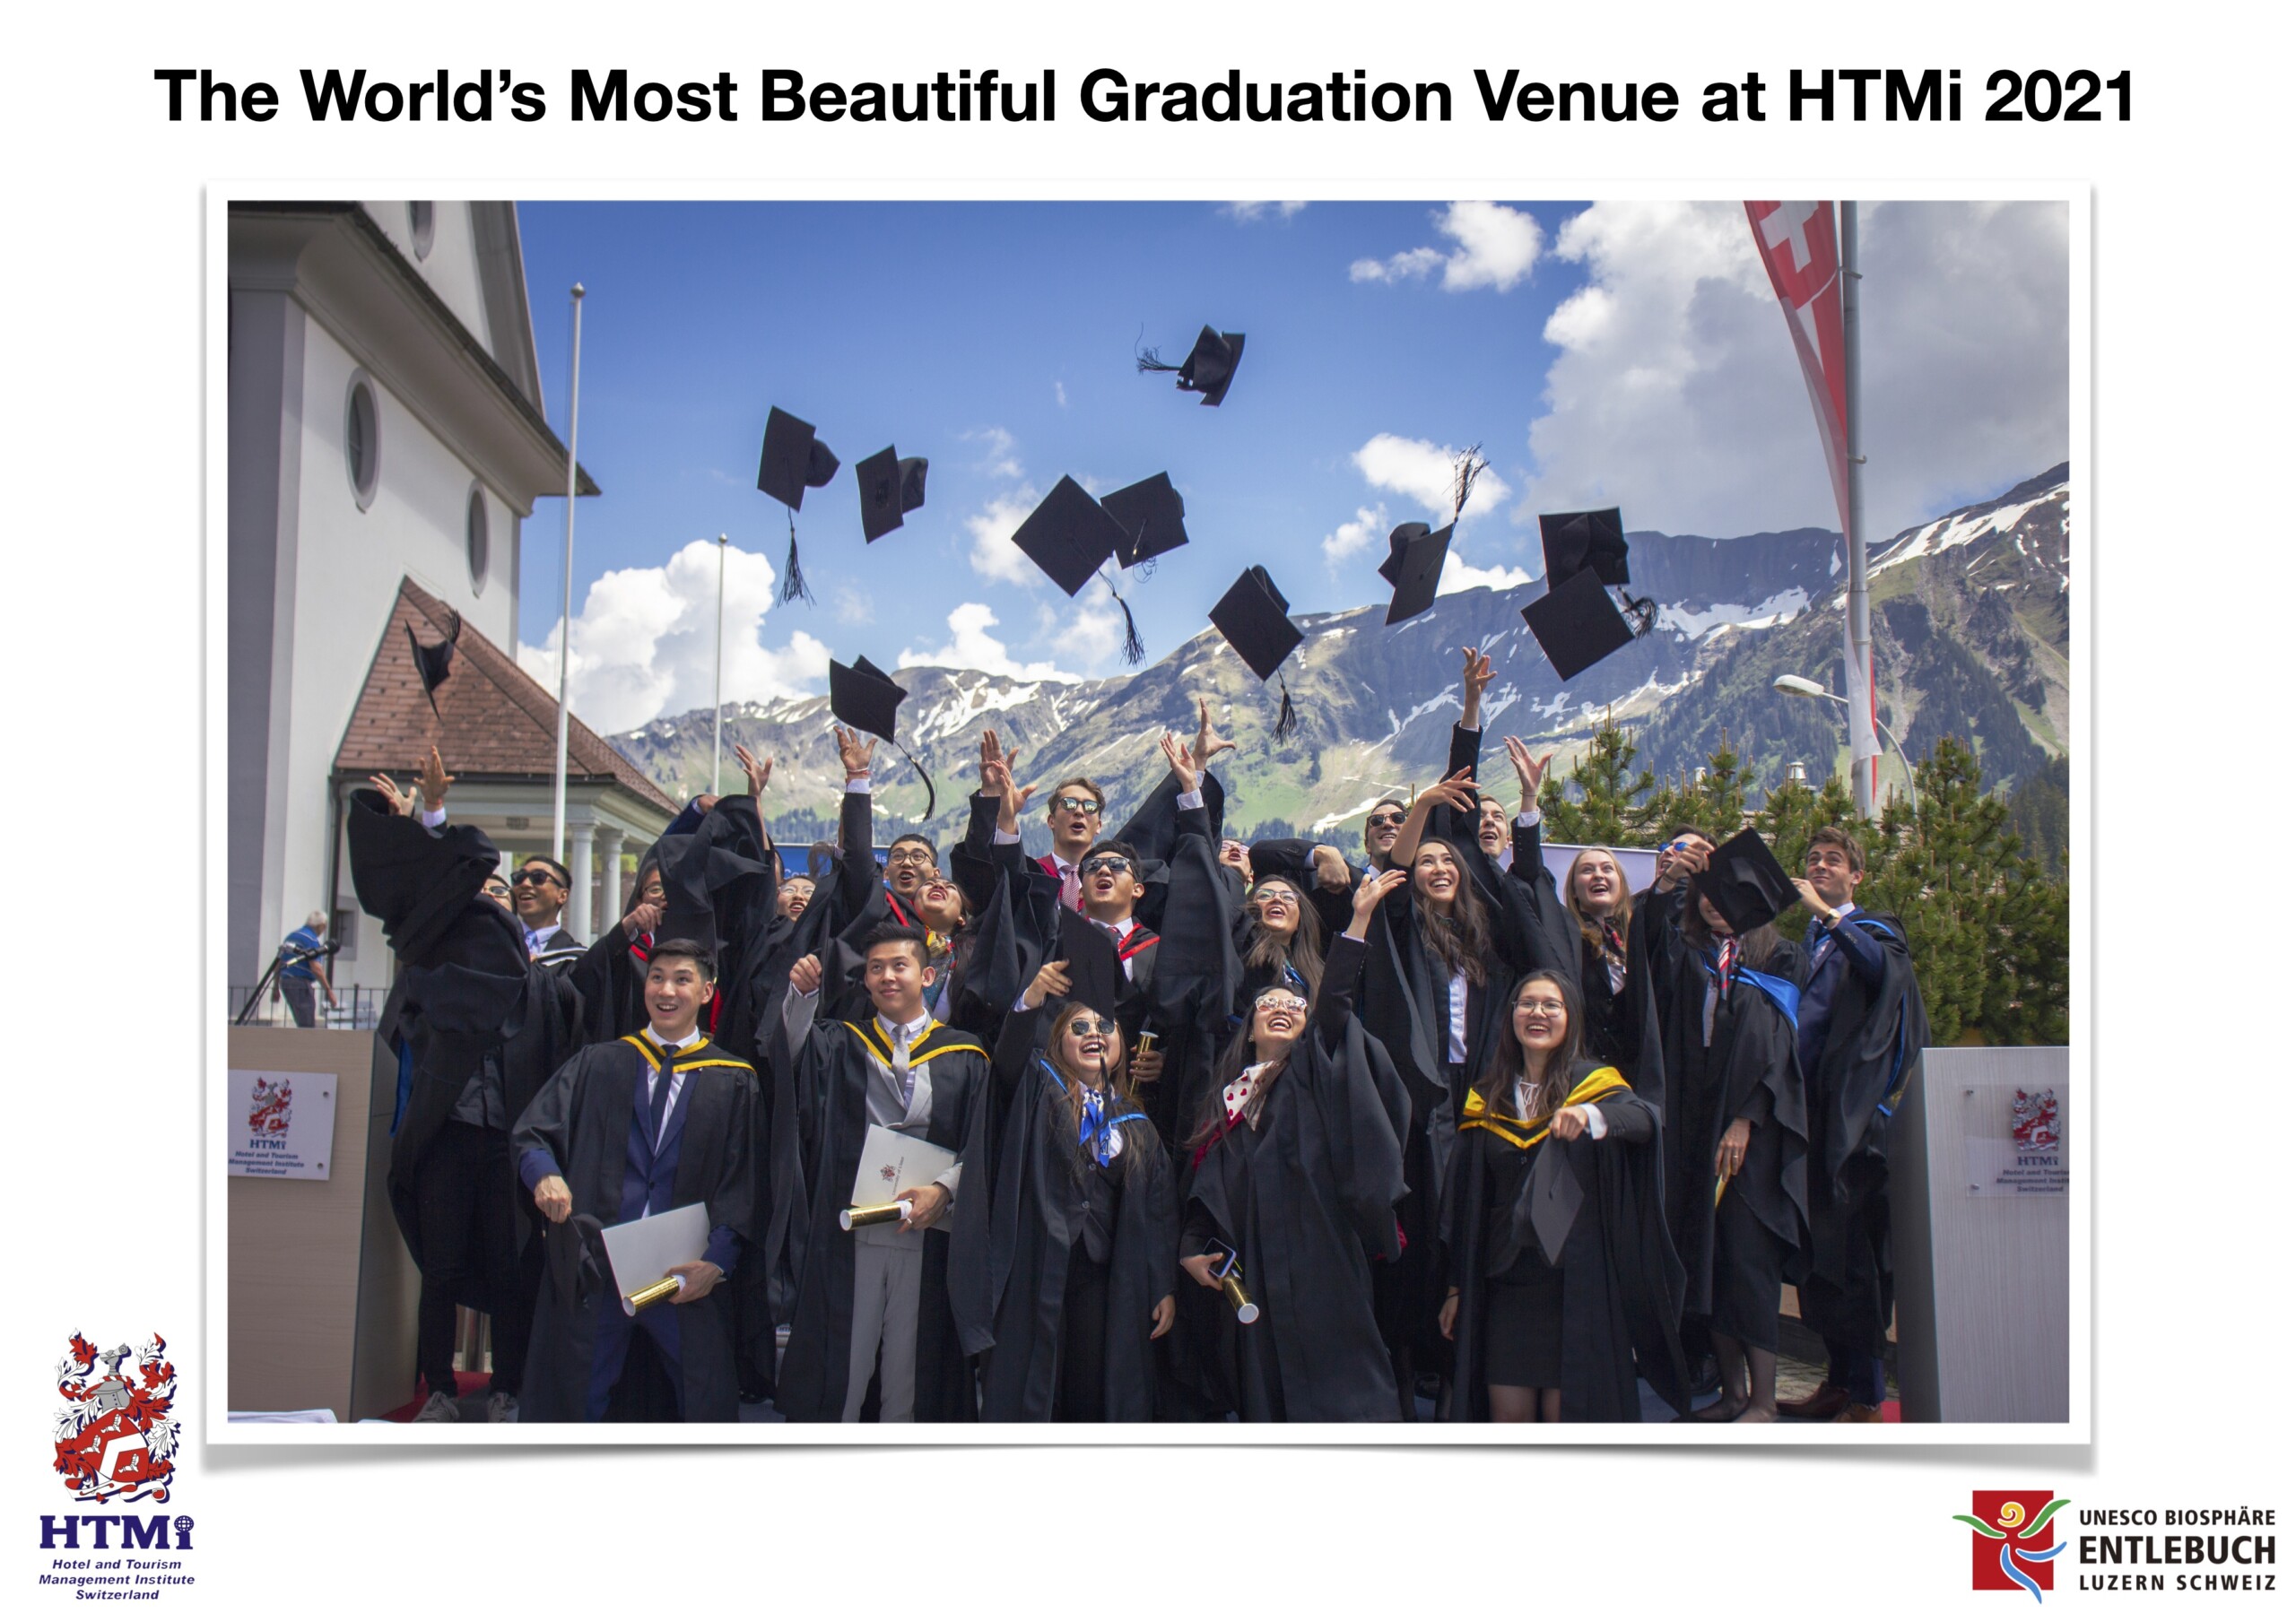 The World’s Most Beautiful Graduation Venue HTMI 2021